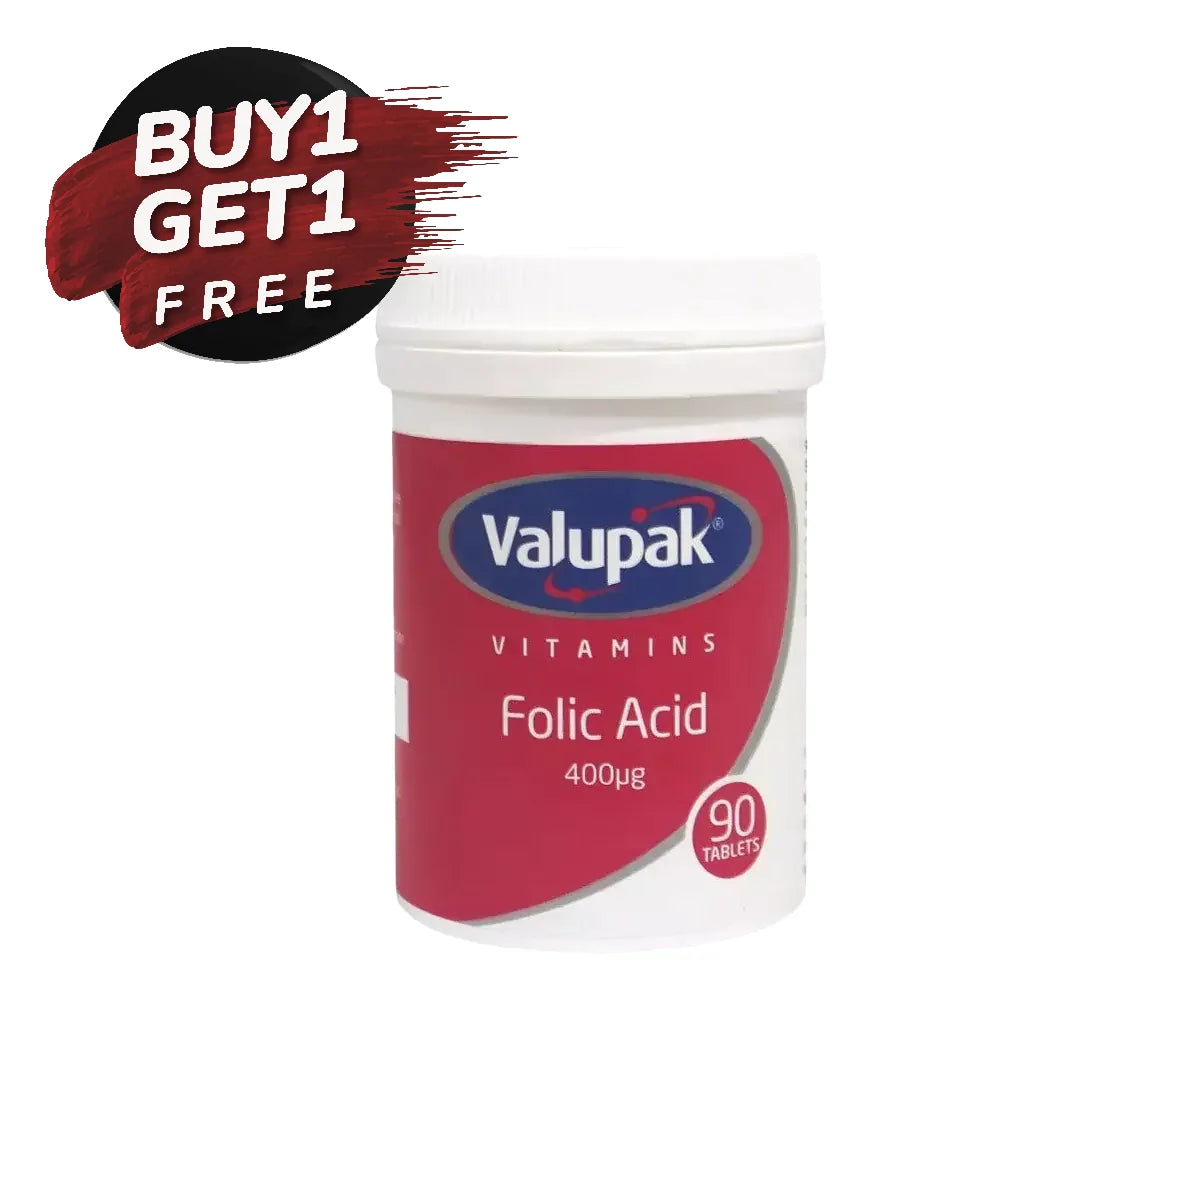 Valupak Folic Acid 400mcg Tablets 90s - Wellness Shoppee